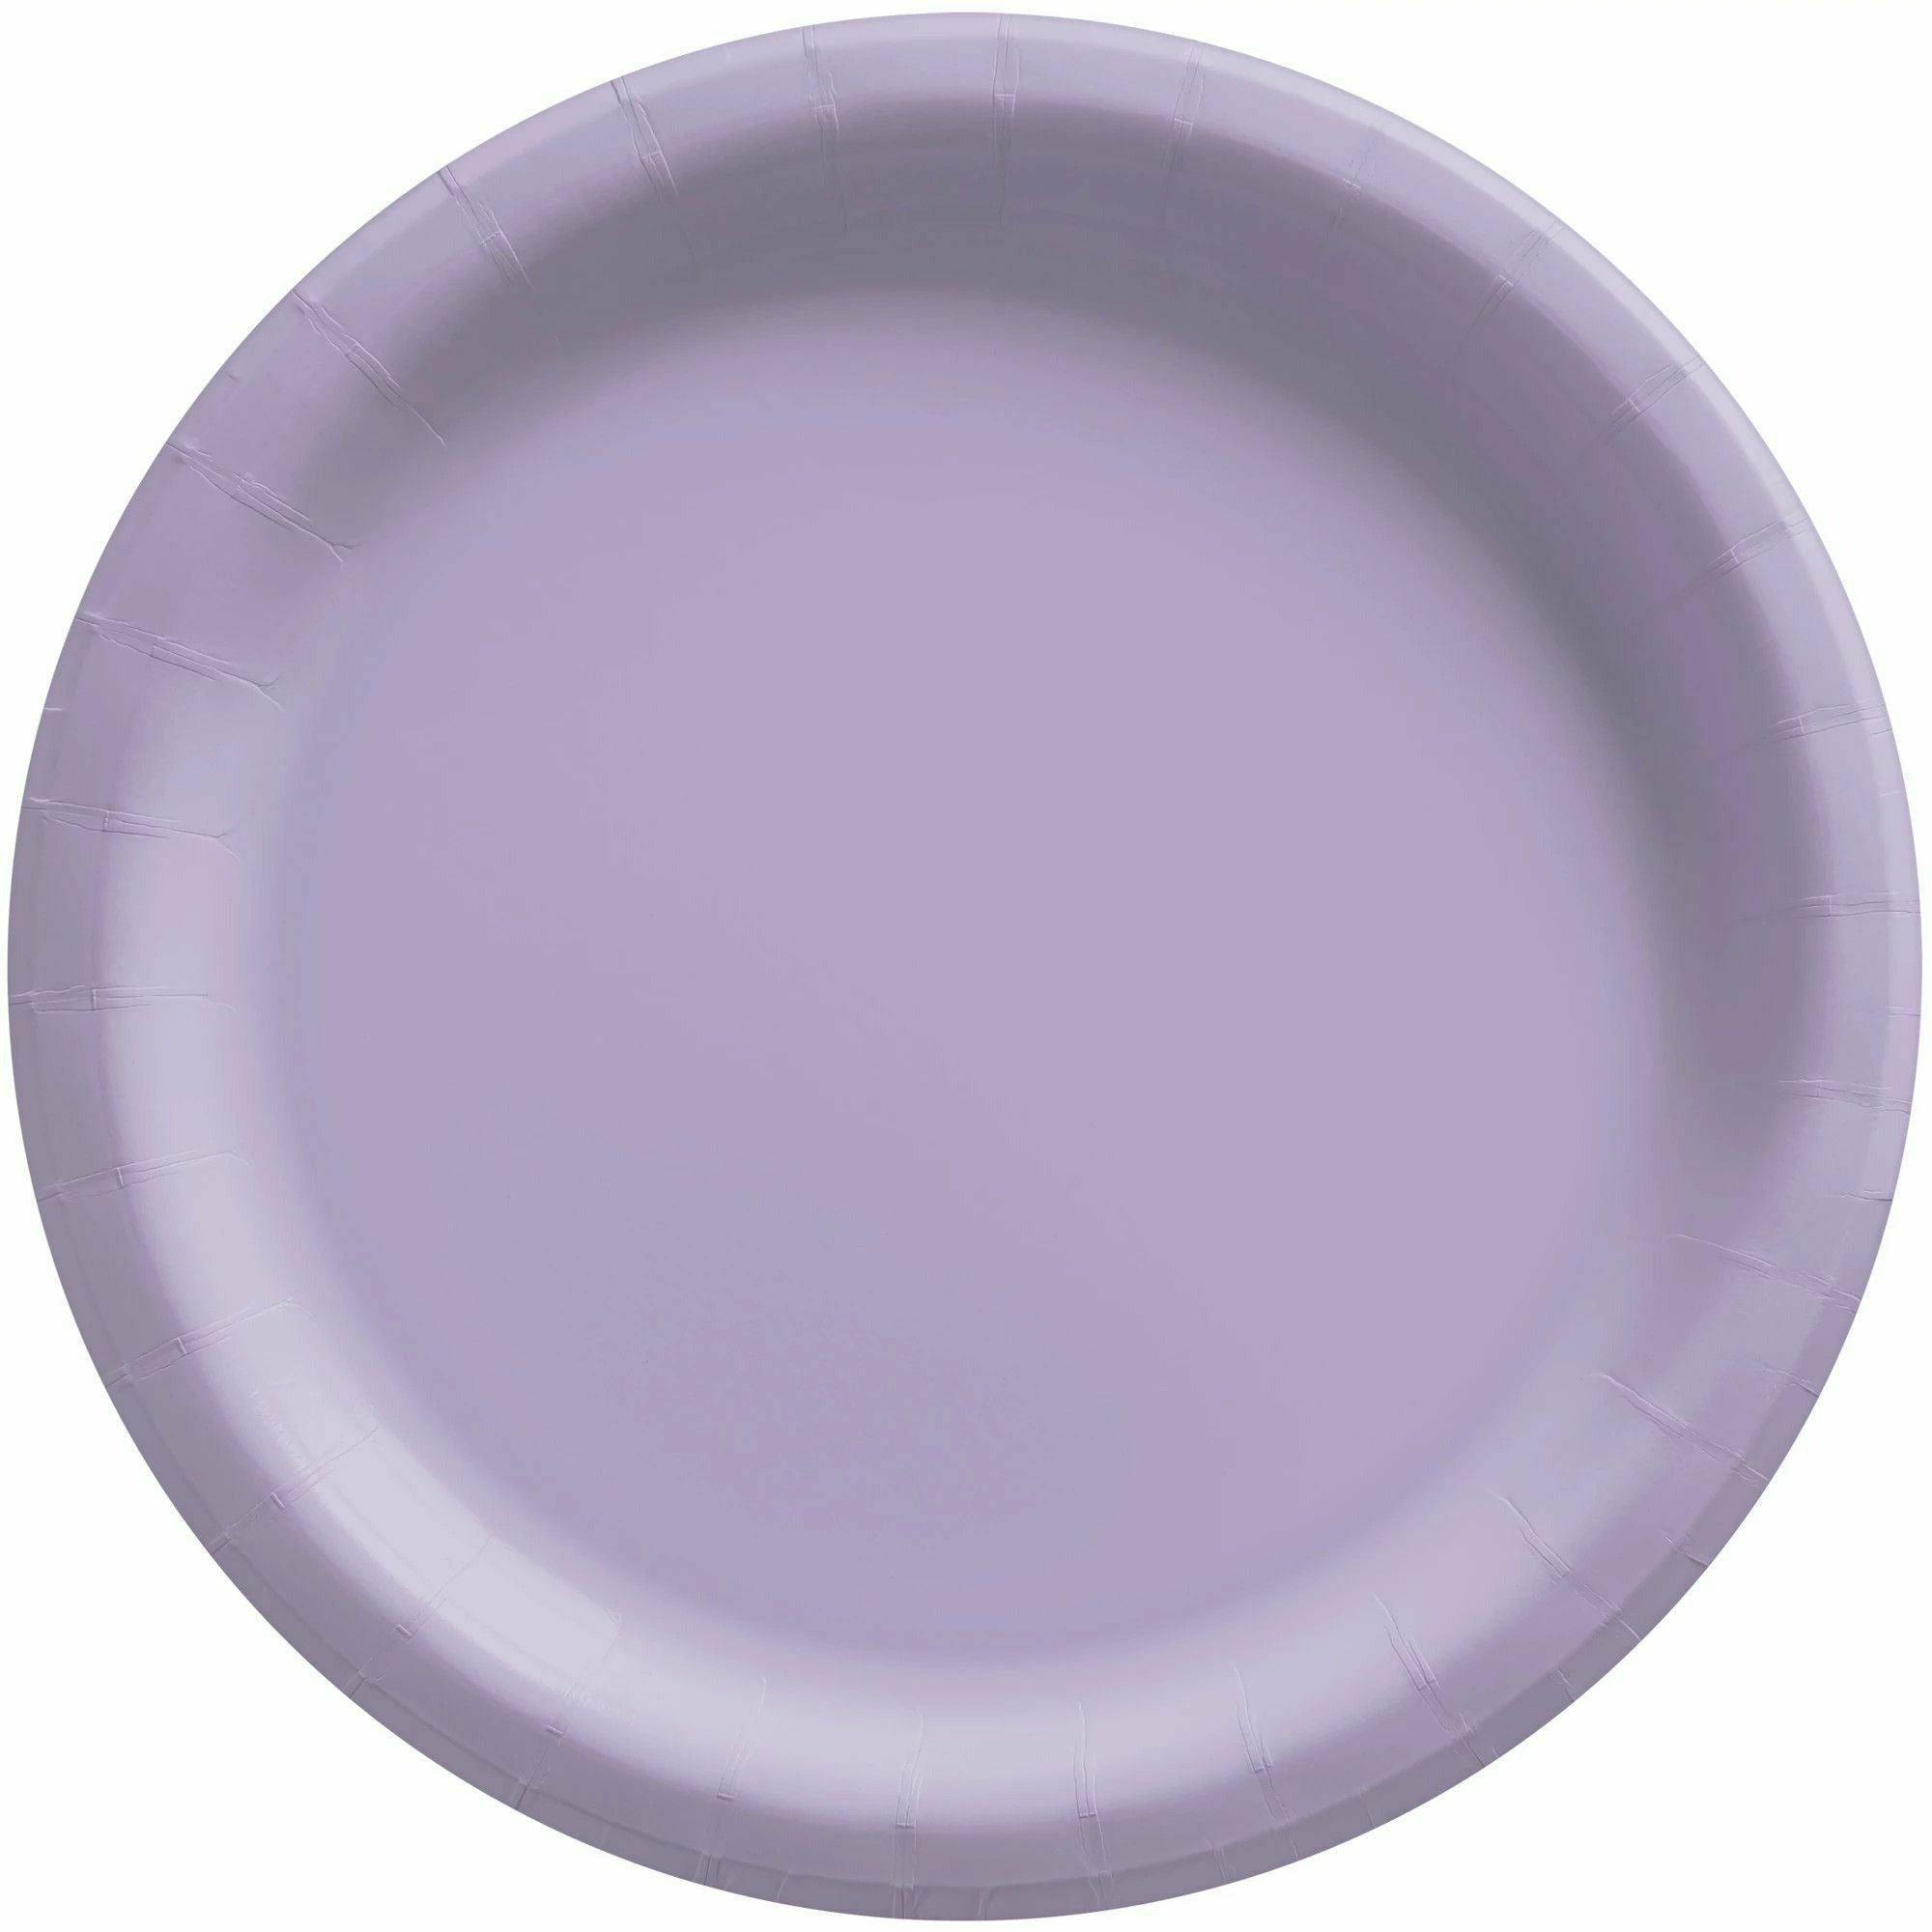 Amscan BASIC Lavender - 8 1/2" Round Paper Plates, 20 Ct.